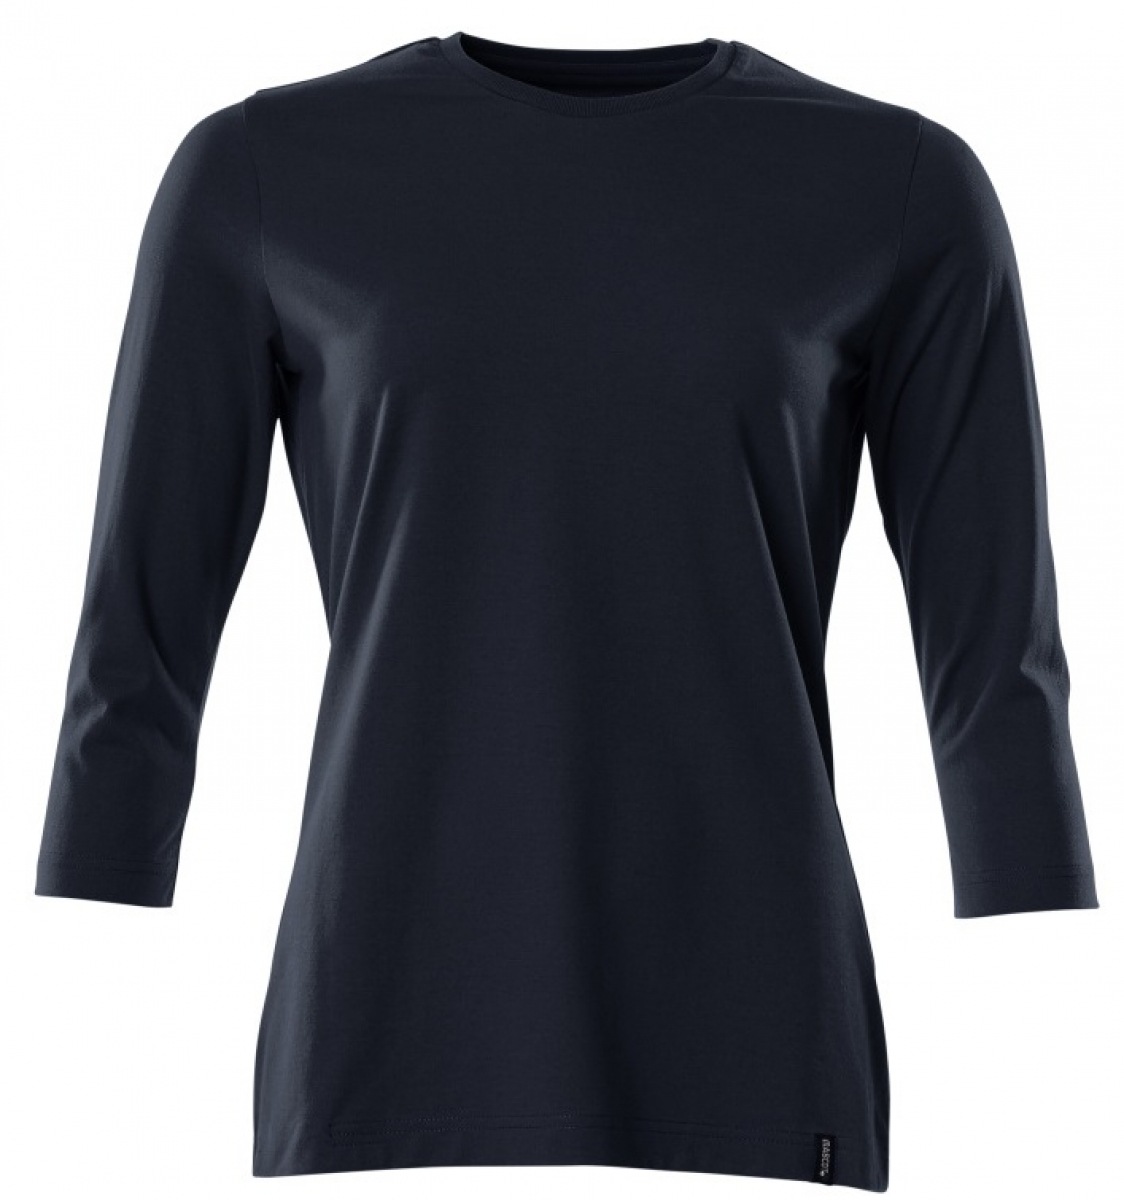 MASCOT-Worker-Shirts, Damen-T-Shirt, 3/4 Arm, schwarzblau